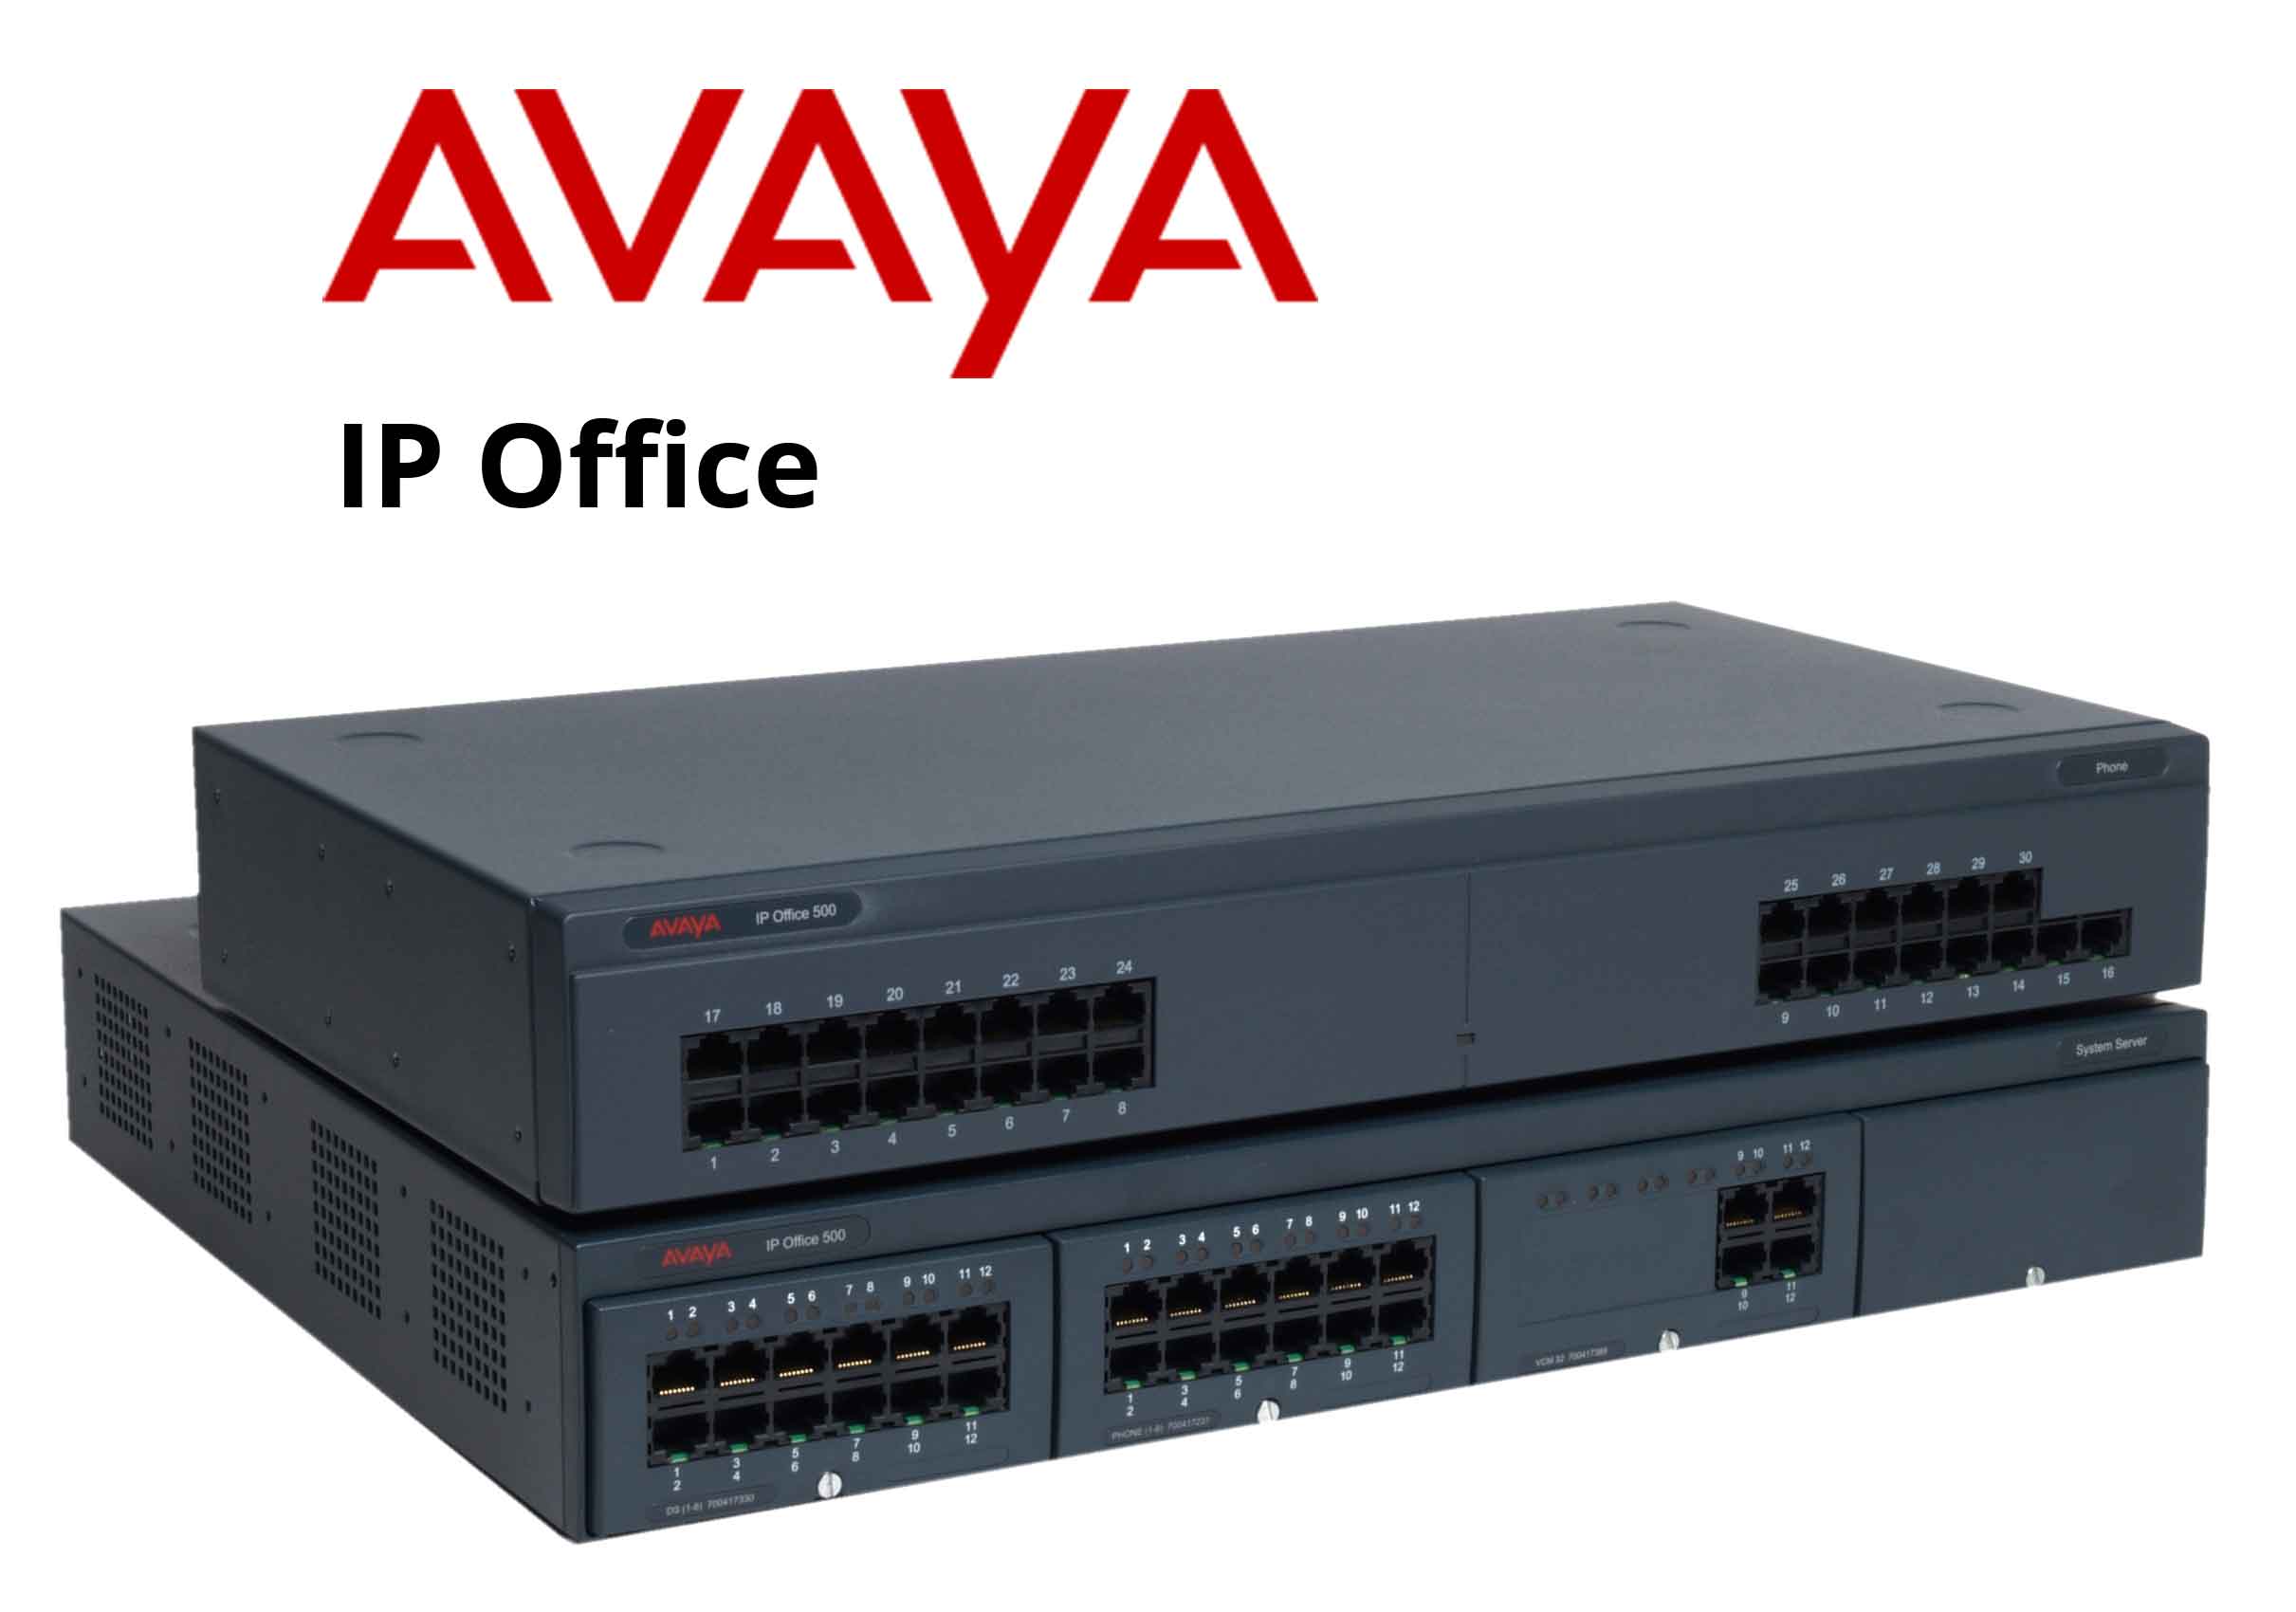 Avaya ip office. Avaya ip500. АТС Avaya IP 500 v2. Avaya IP Office 500 v2. Комплект АТС Avaya IP Office ip500.